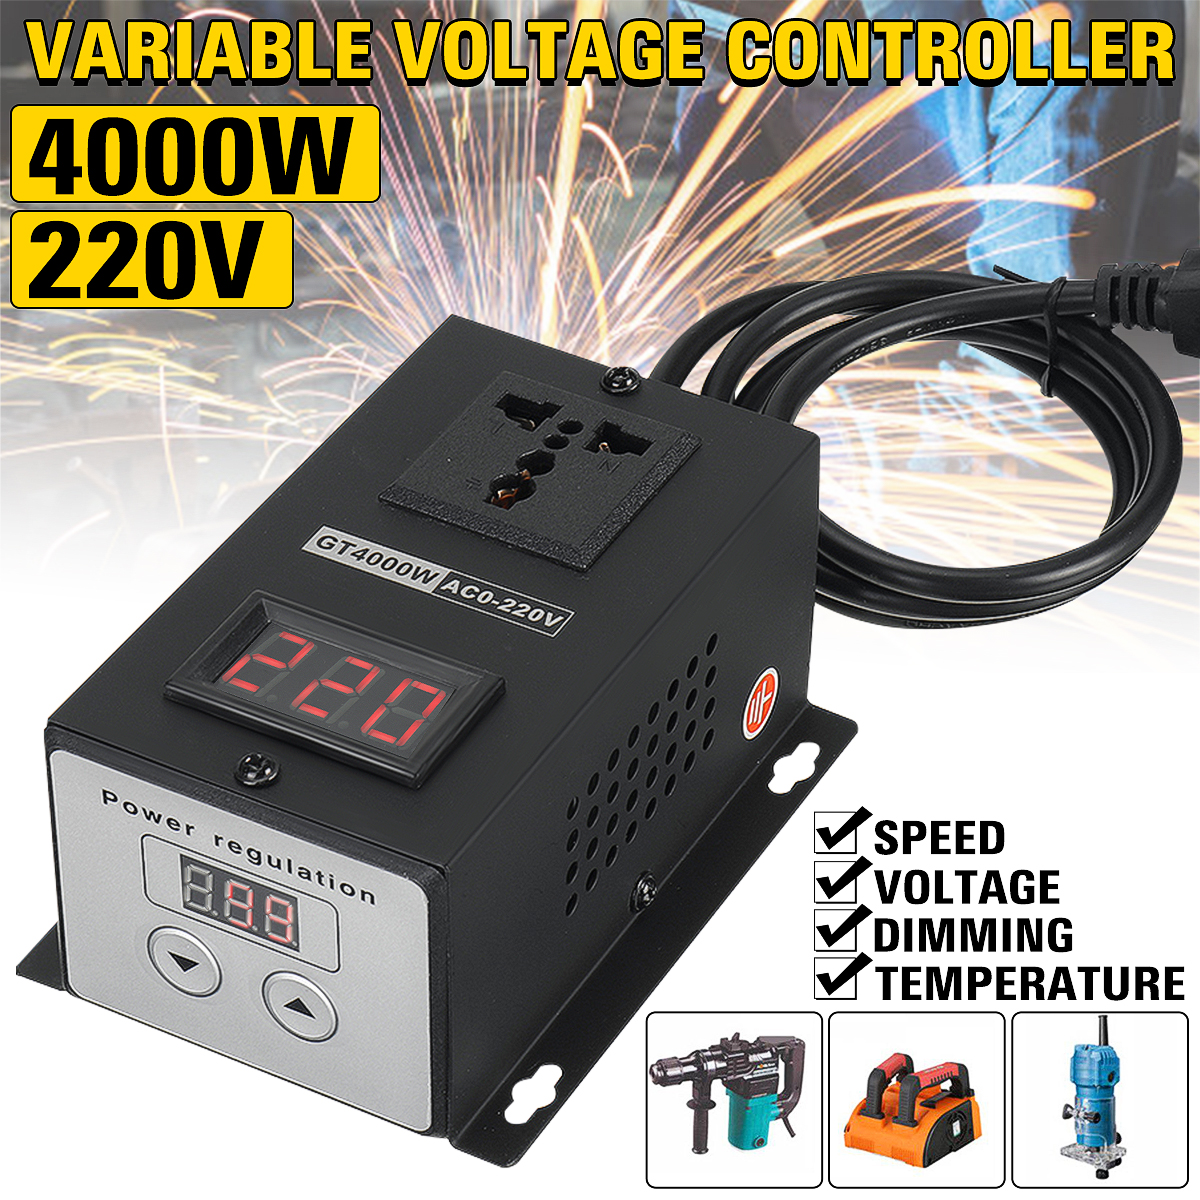 4000W-Variable-Voltage-Controller-Regulator-Speed-Motor-Fan-Controller-AC-0-220V-1922504-1